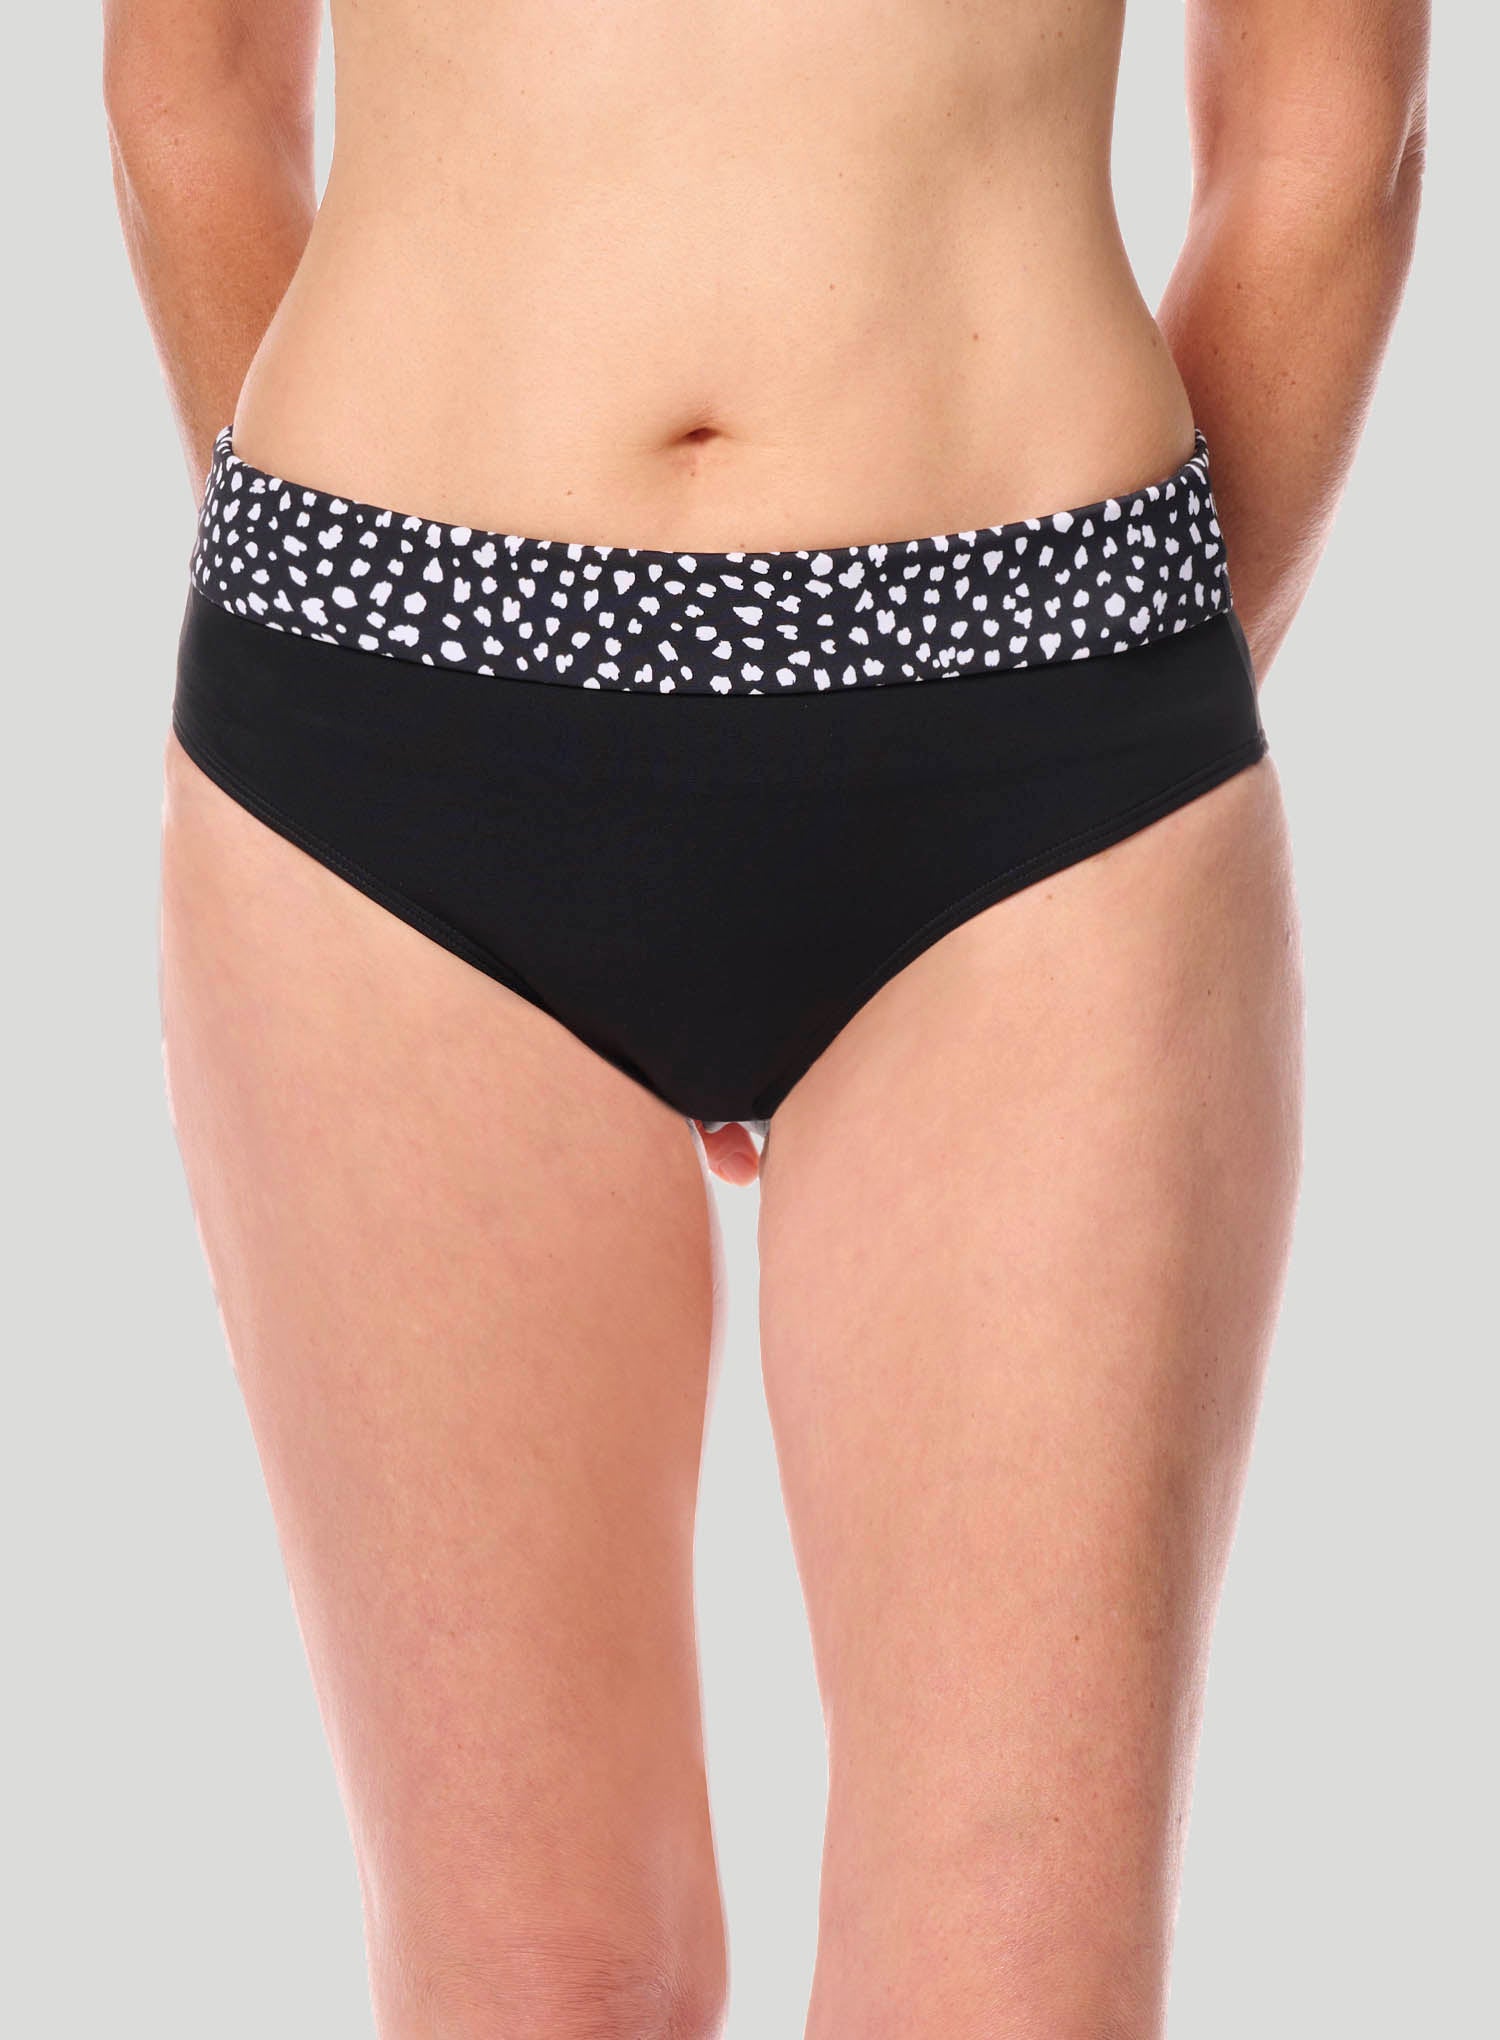 Manila Blouson Swim Top - black / white, Pocketed Mastectomy Swimwear, Amoena USA